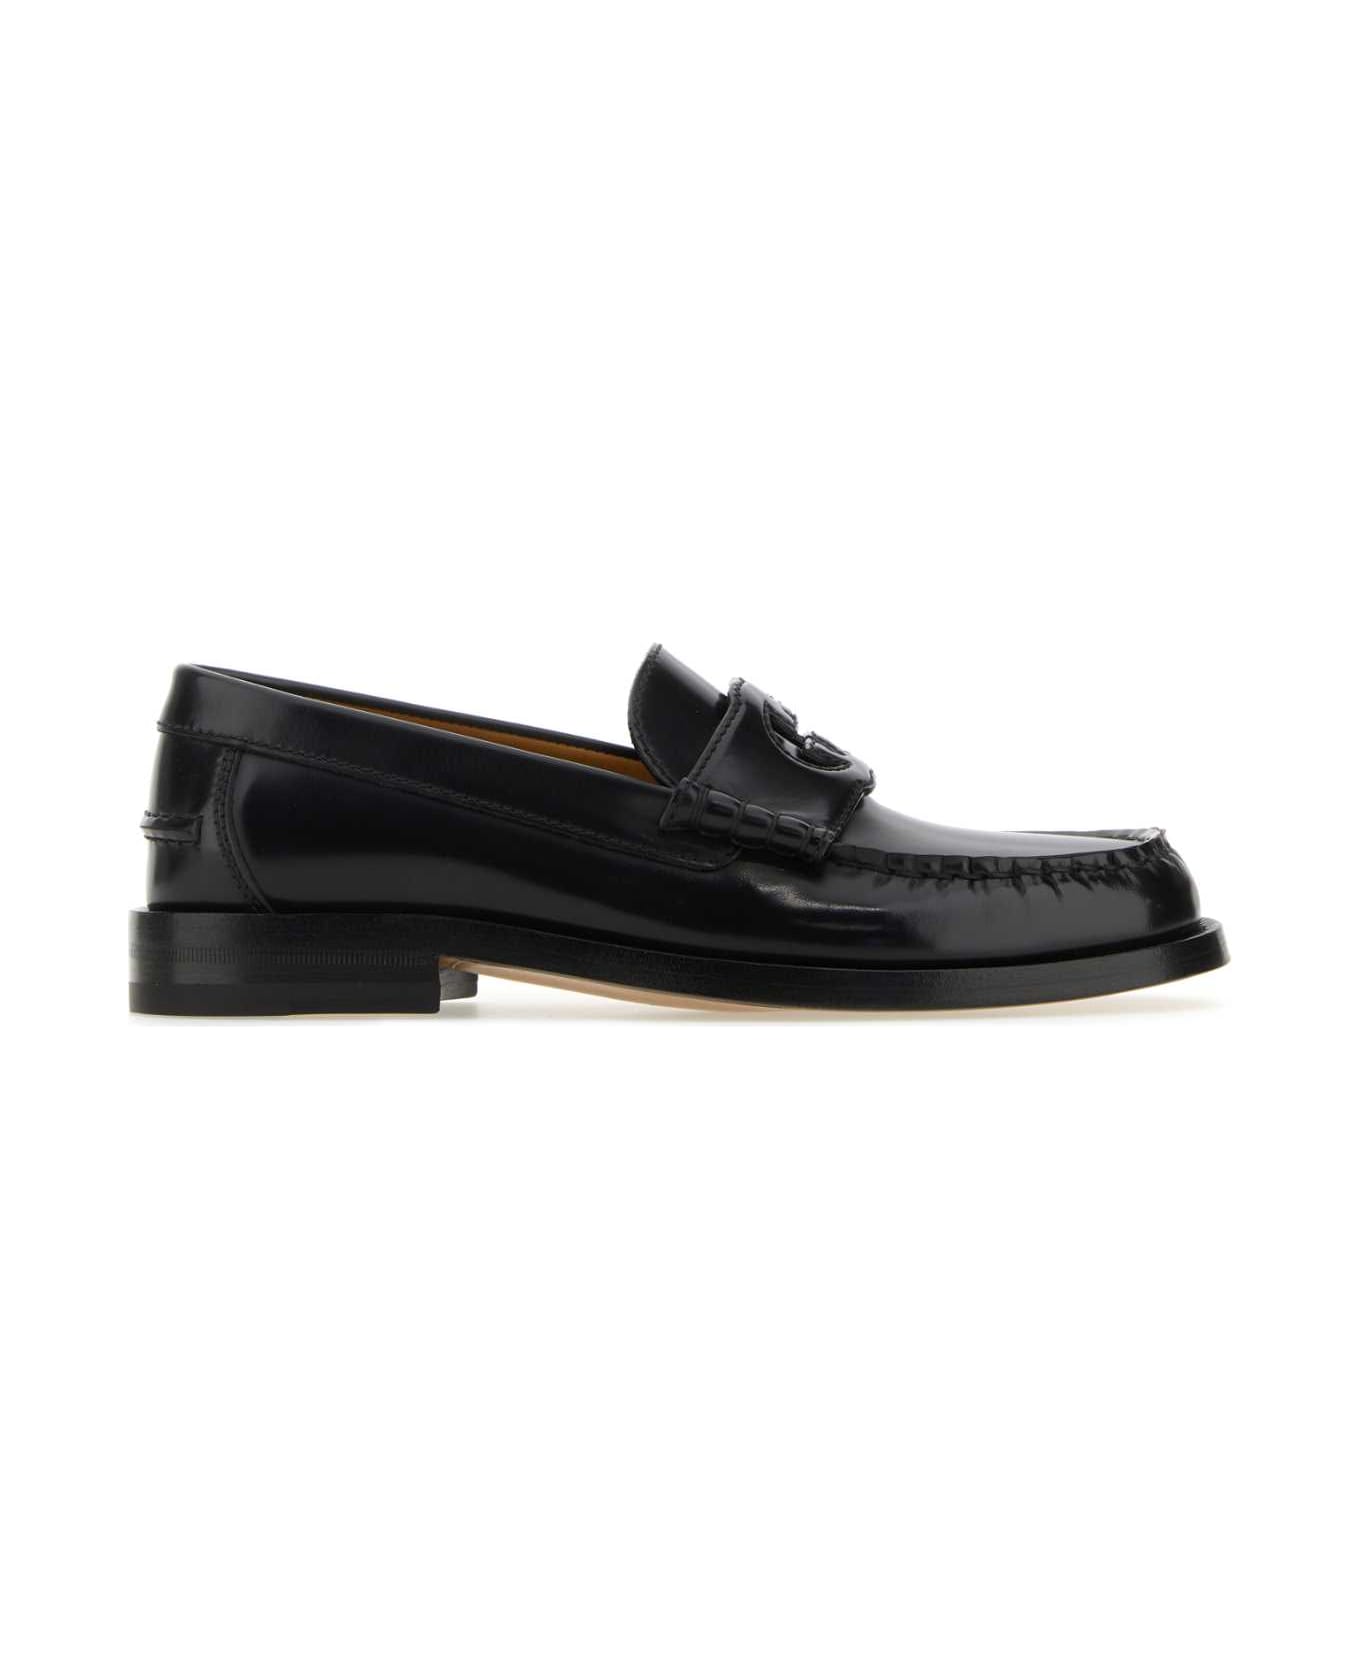 Gucci Black Leather Loafers - Black フラットシューズ